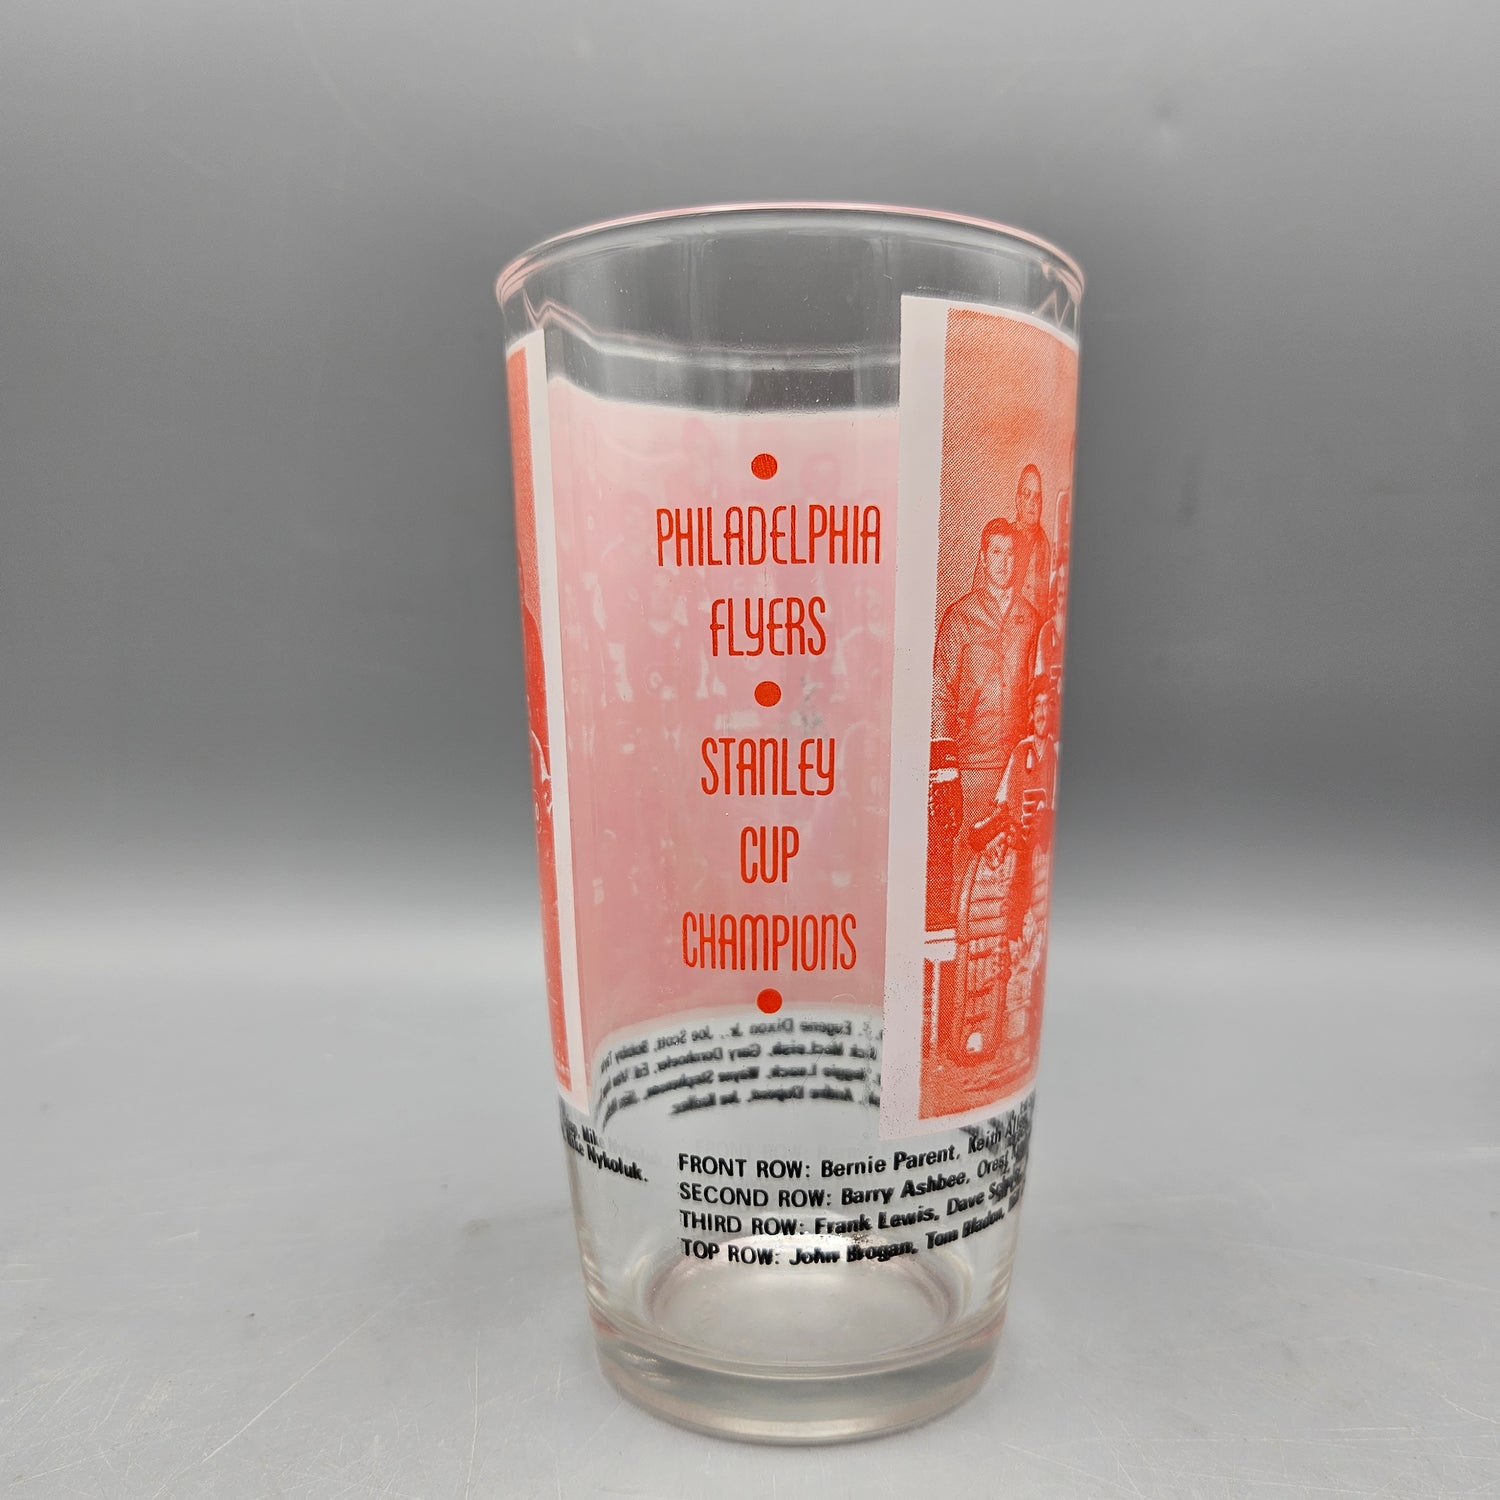 1975 Philadelphia Flyers Stanley Cup Championship Glass Tumbler